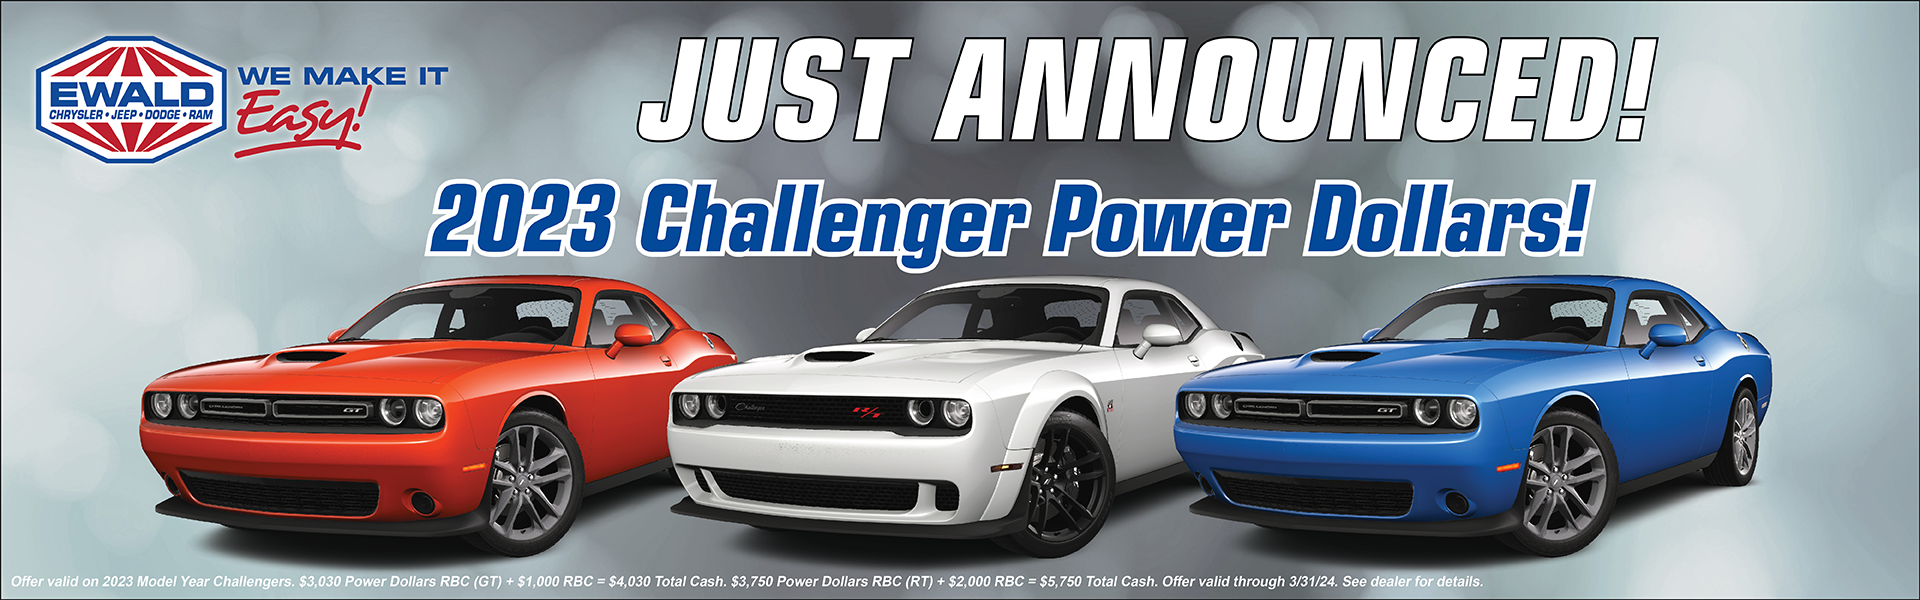 Dodge Challenger Power Dollars